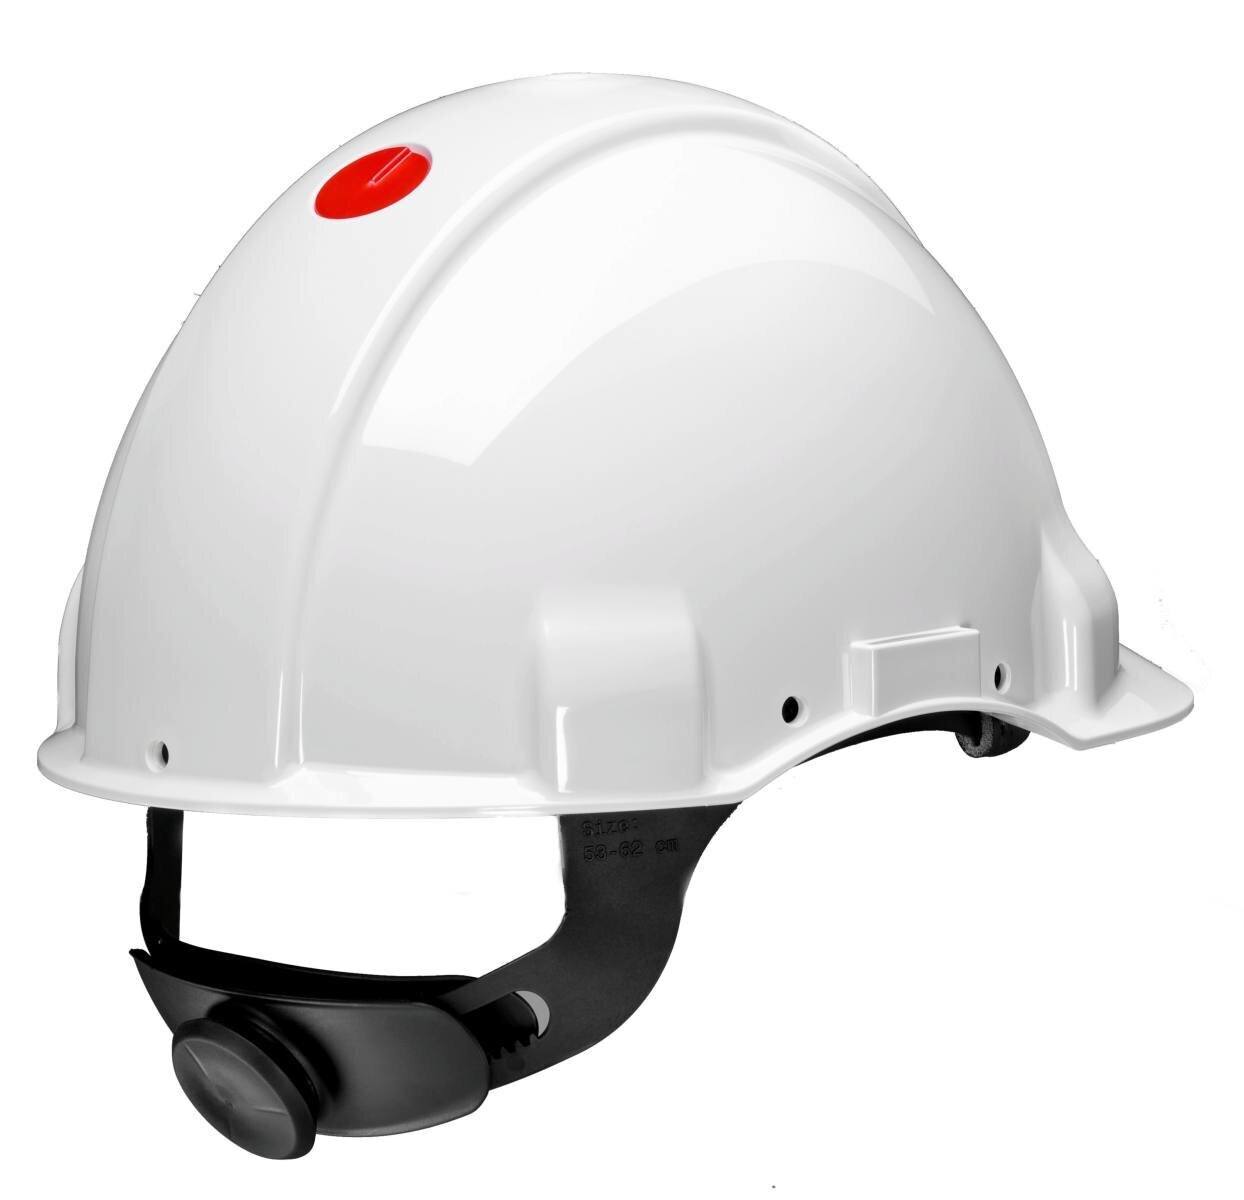 3M Safety helmet, Uvicator, ratchet fastening, non-ventilated, dielectric 1000 V, leather sweatband, white, G3001MUV1000V-VI